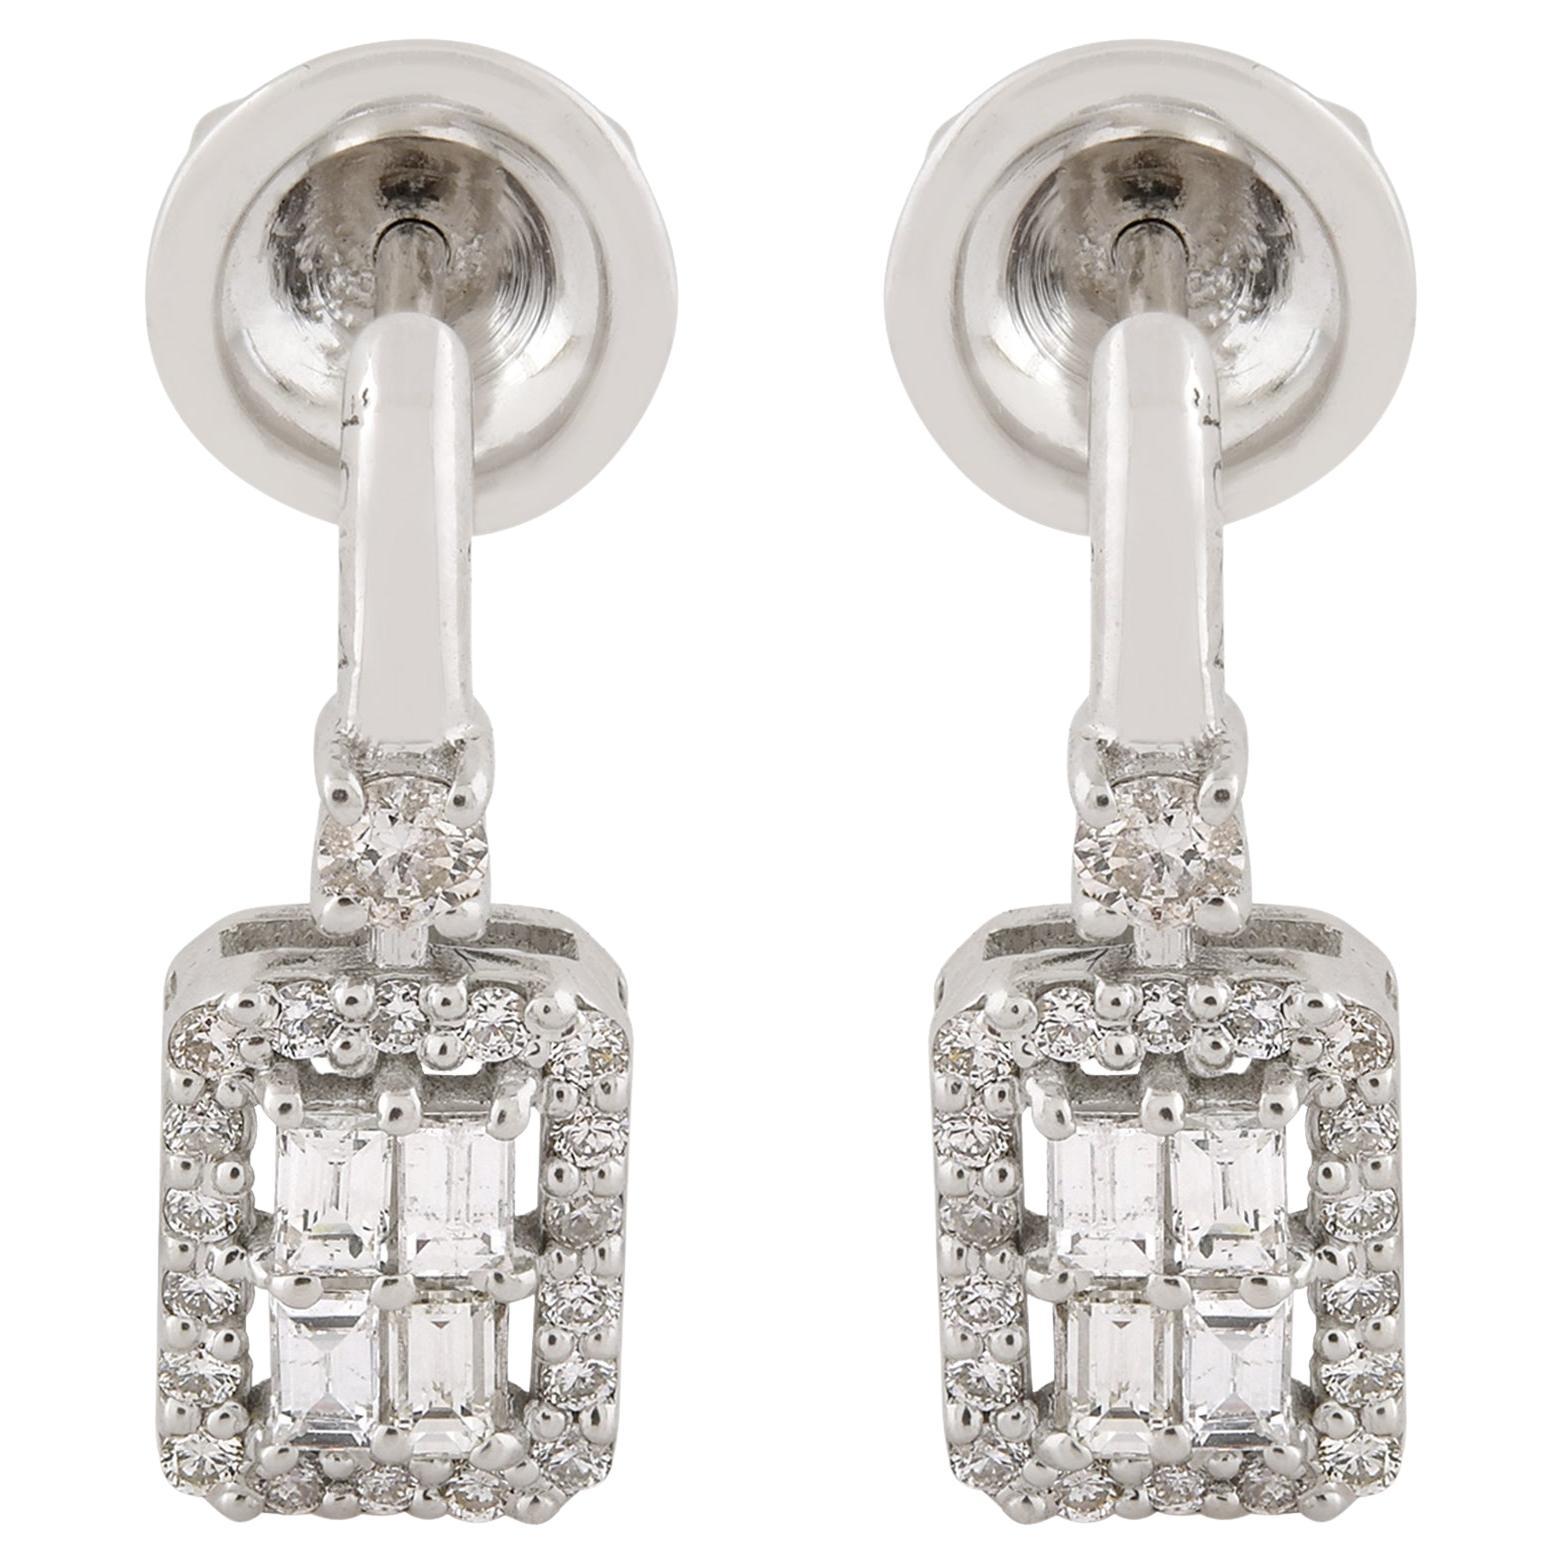 0.55 Carat Baguette Diamond Stud Earrings Solid 10k White Gold Handmade Jewelry